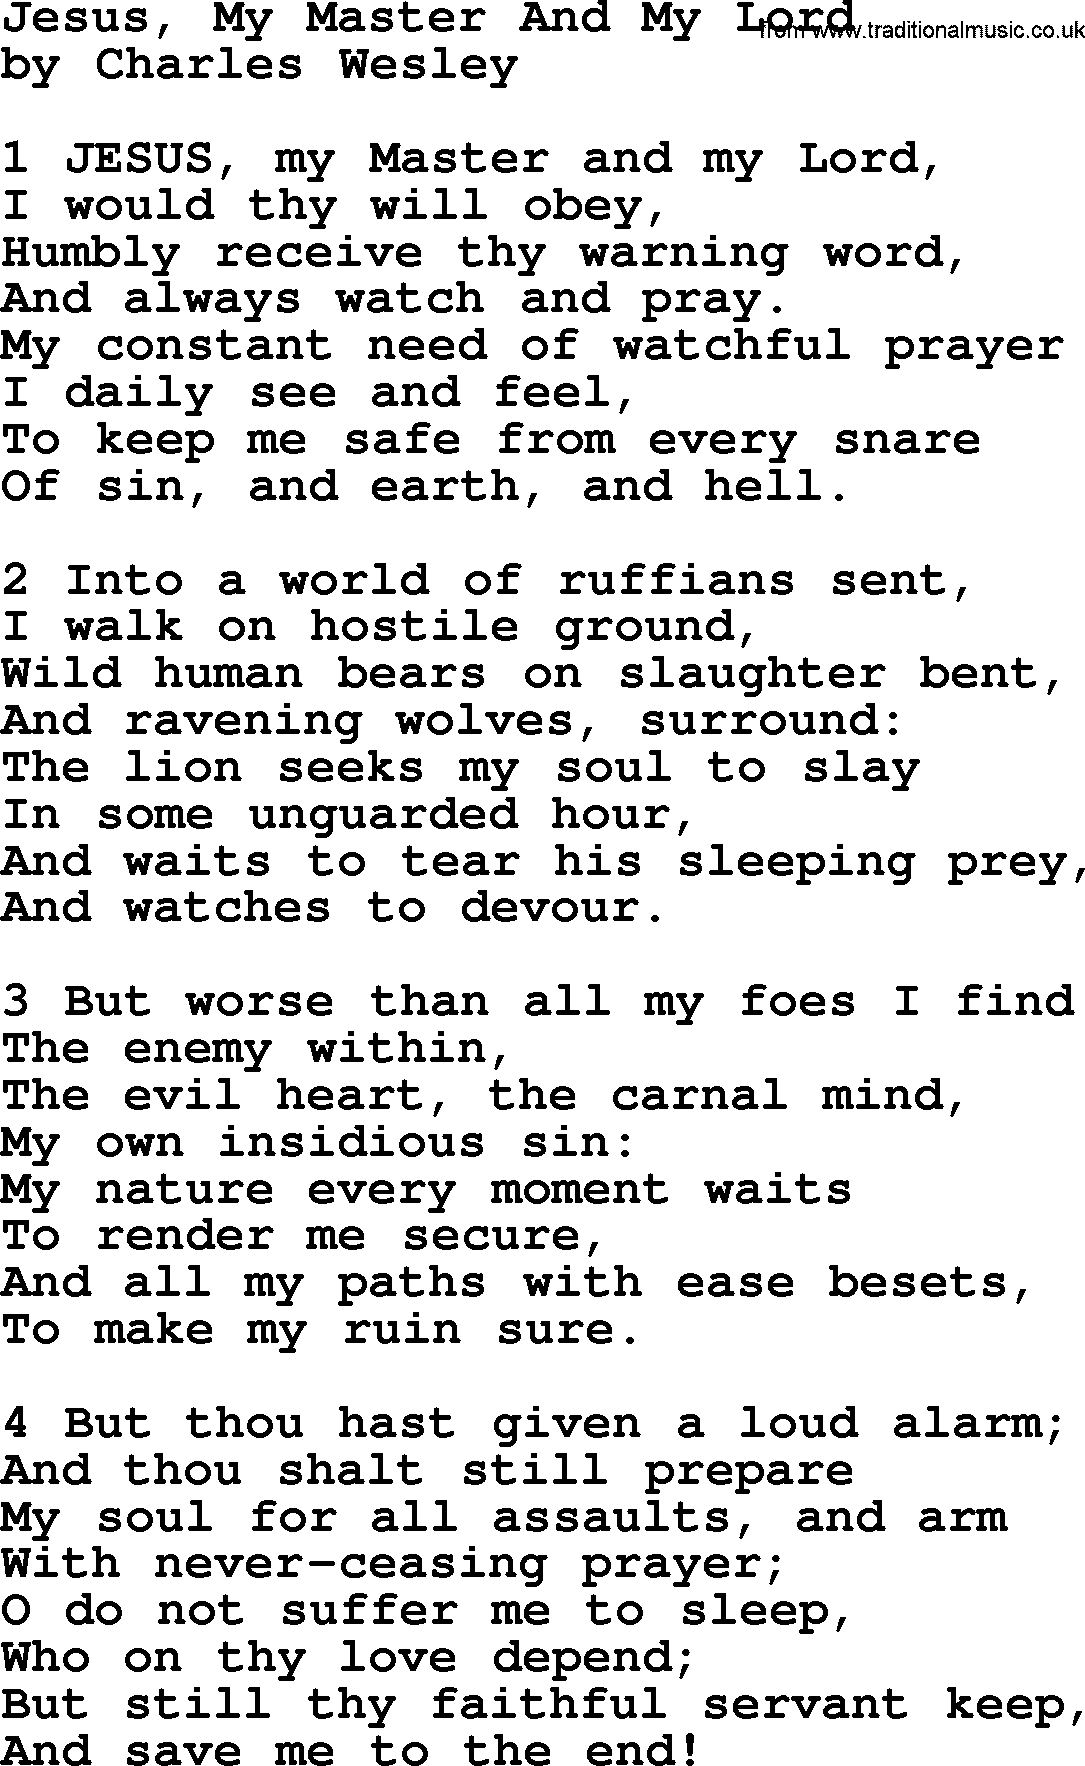 Charles Wesley hymn: Jesus, My Master And My Lord, lyrics